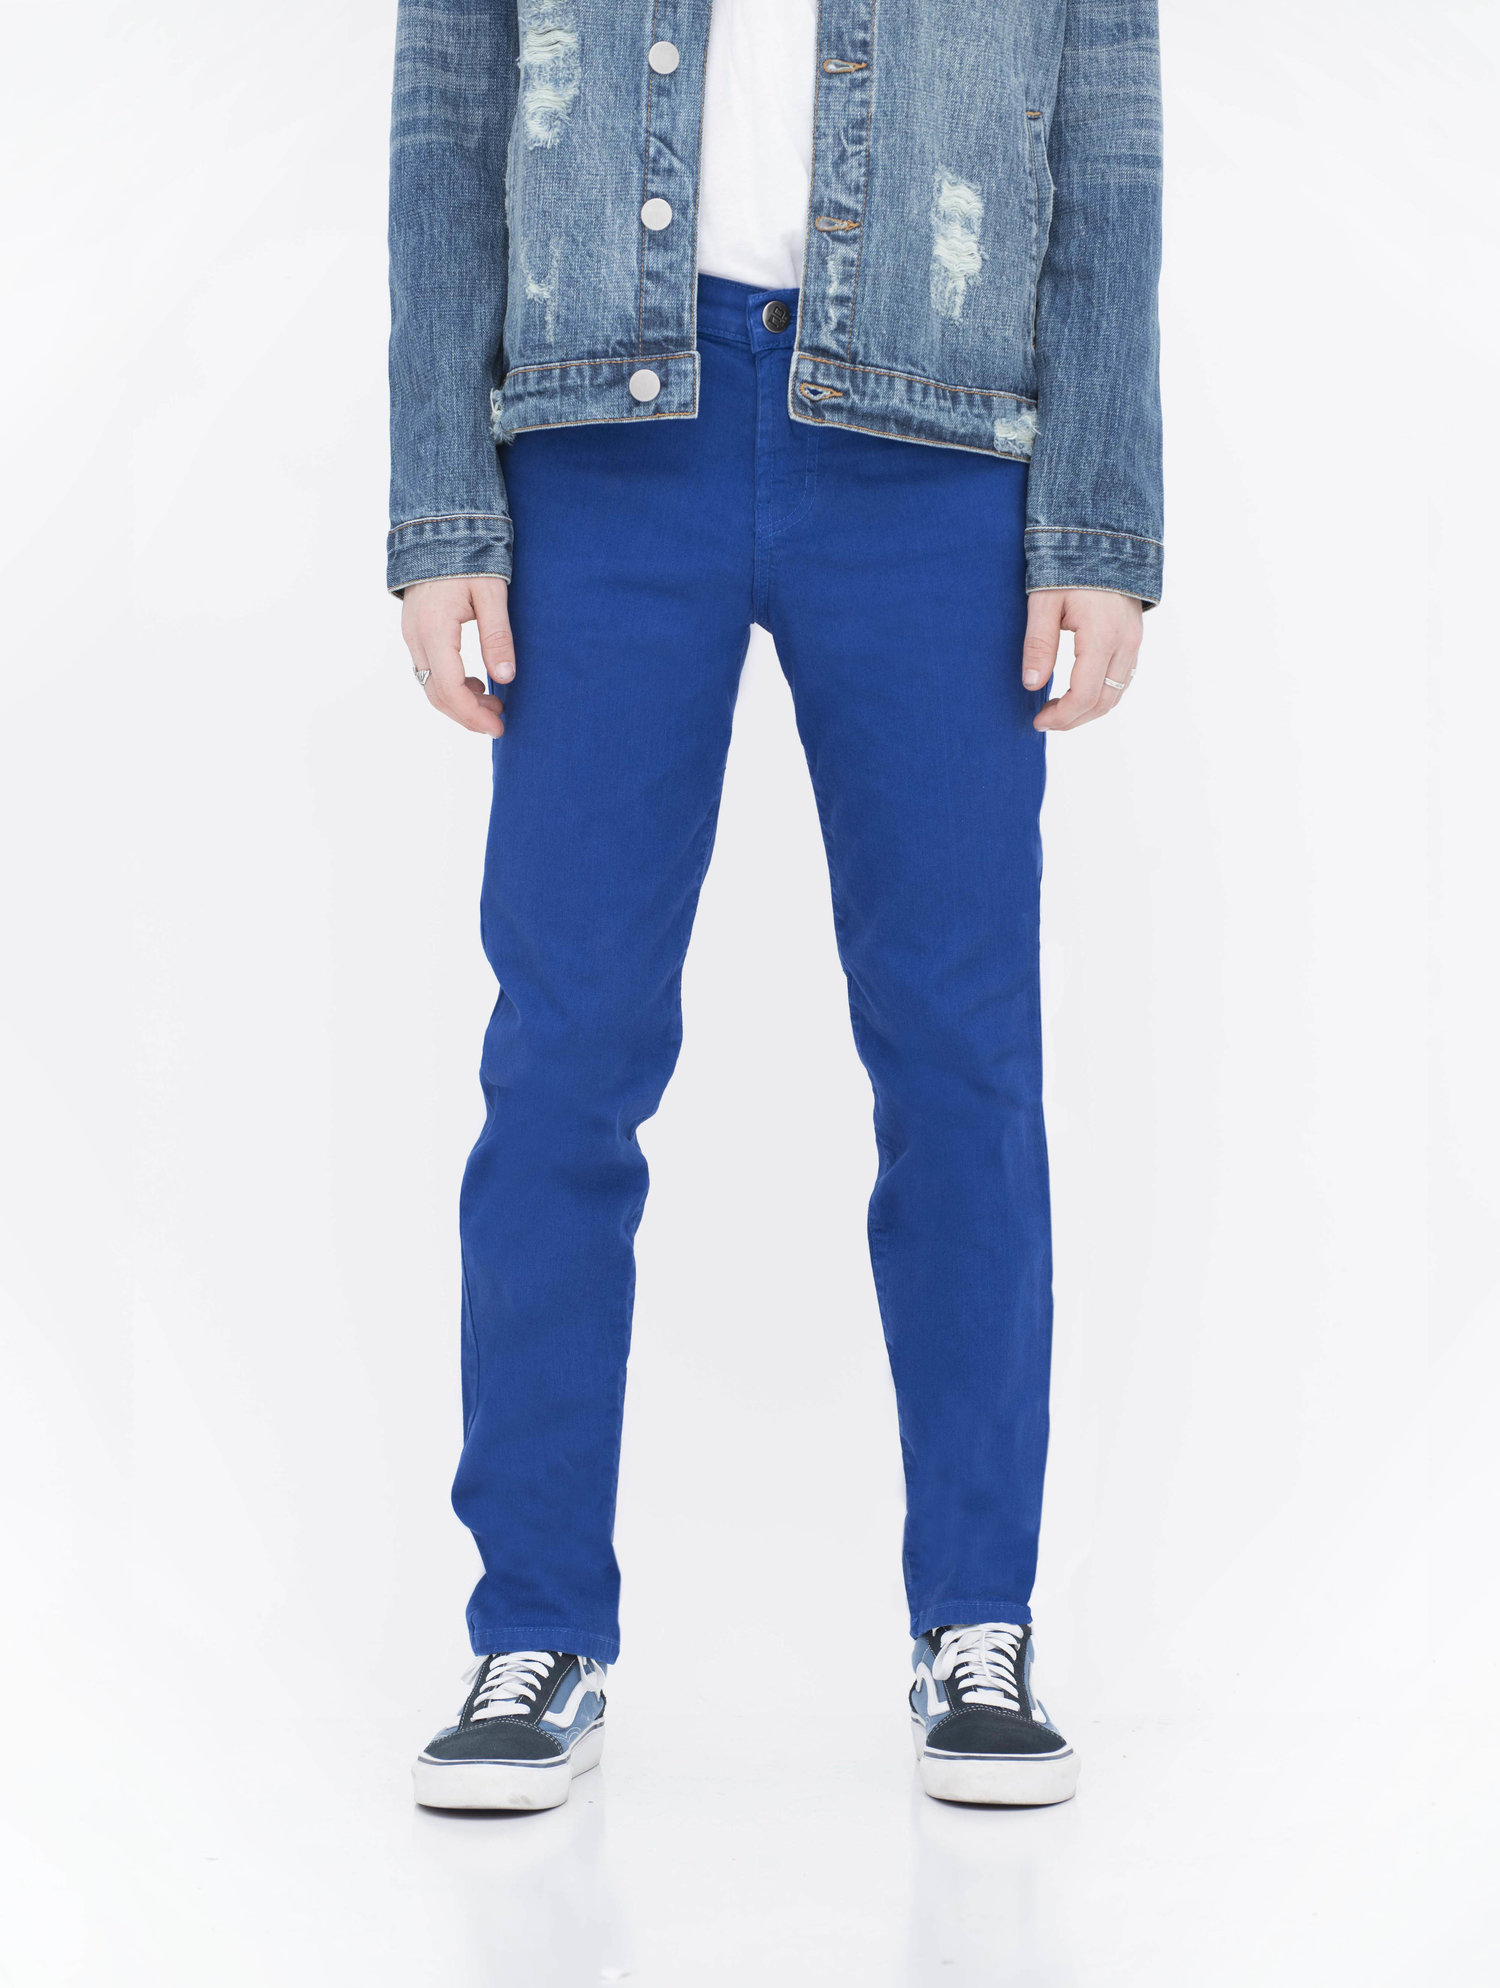 Royal Blue Skinny Jeans For Men